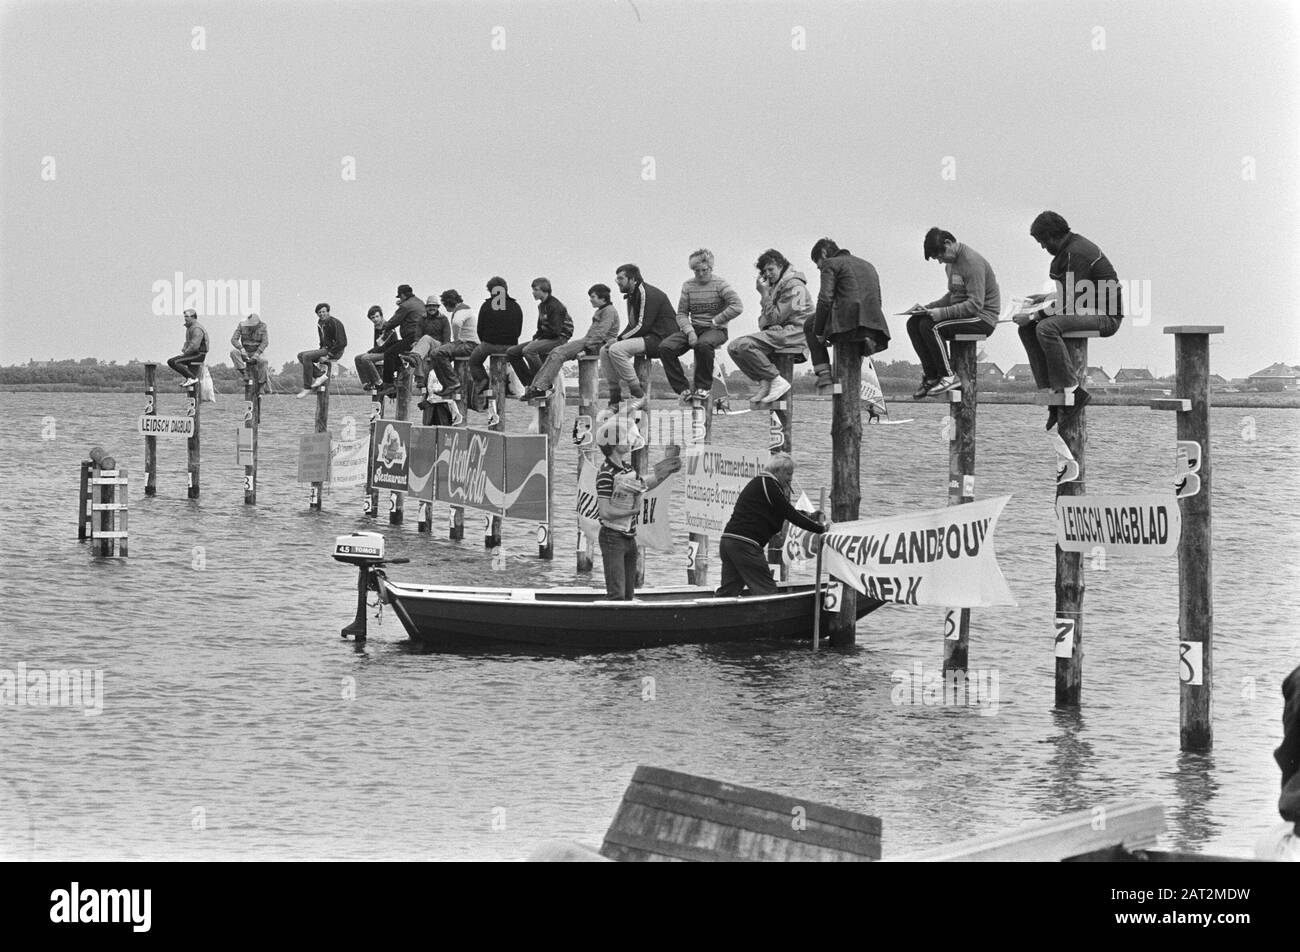 World Championships in Noordwijkerhout; Pole seaters at the Oostduin lake Date: 22 July 1981 Location: Noordwijkerhout, Zuid-Holland Keywords: pole sitten, World Championships Stock Photo